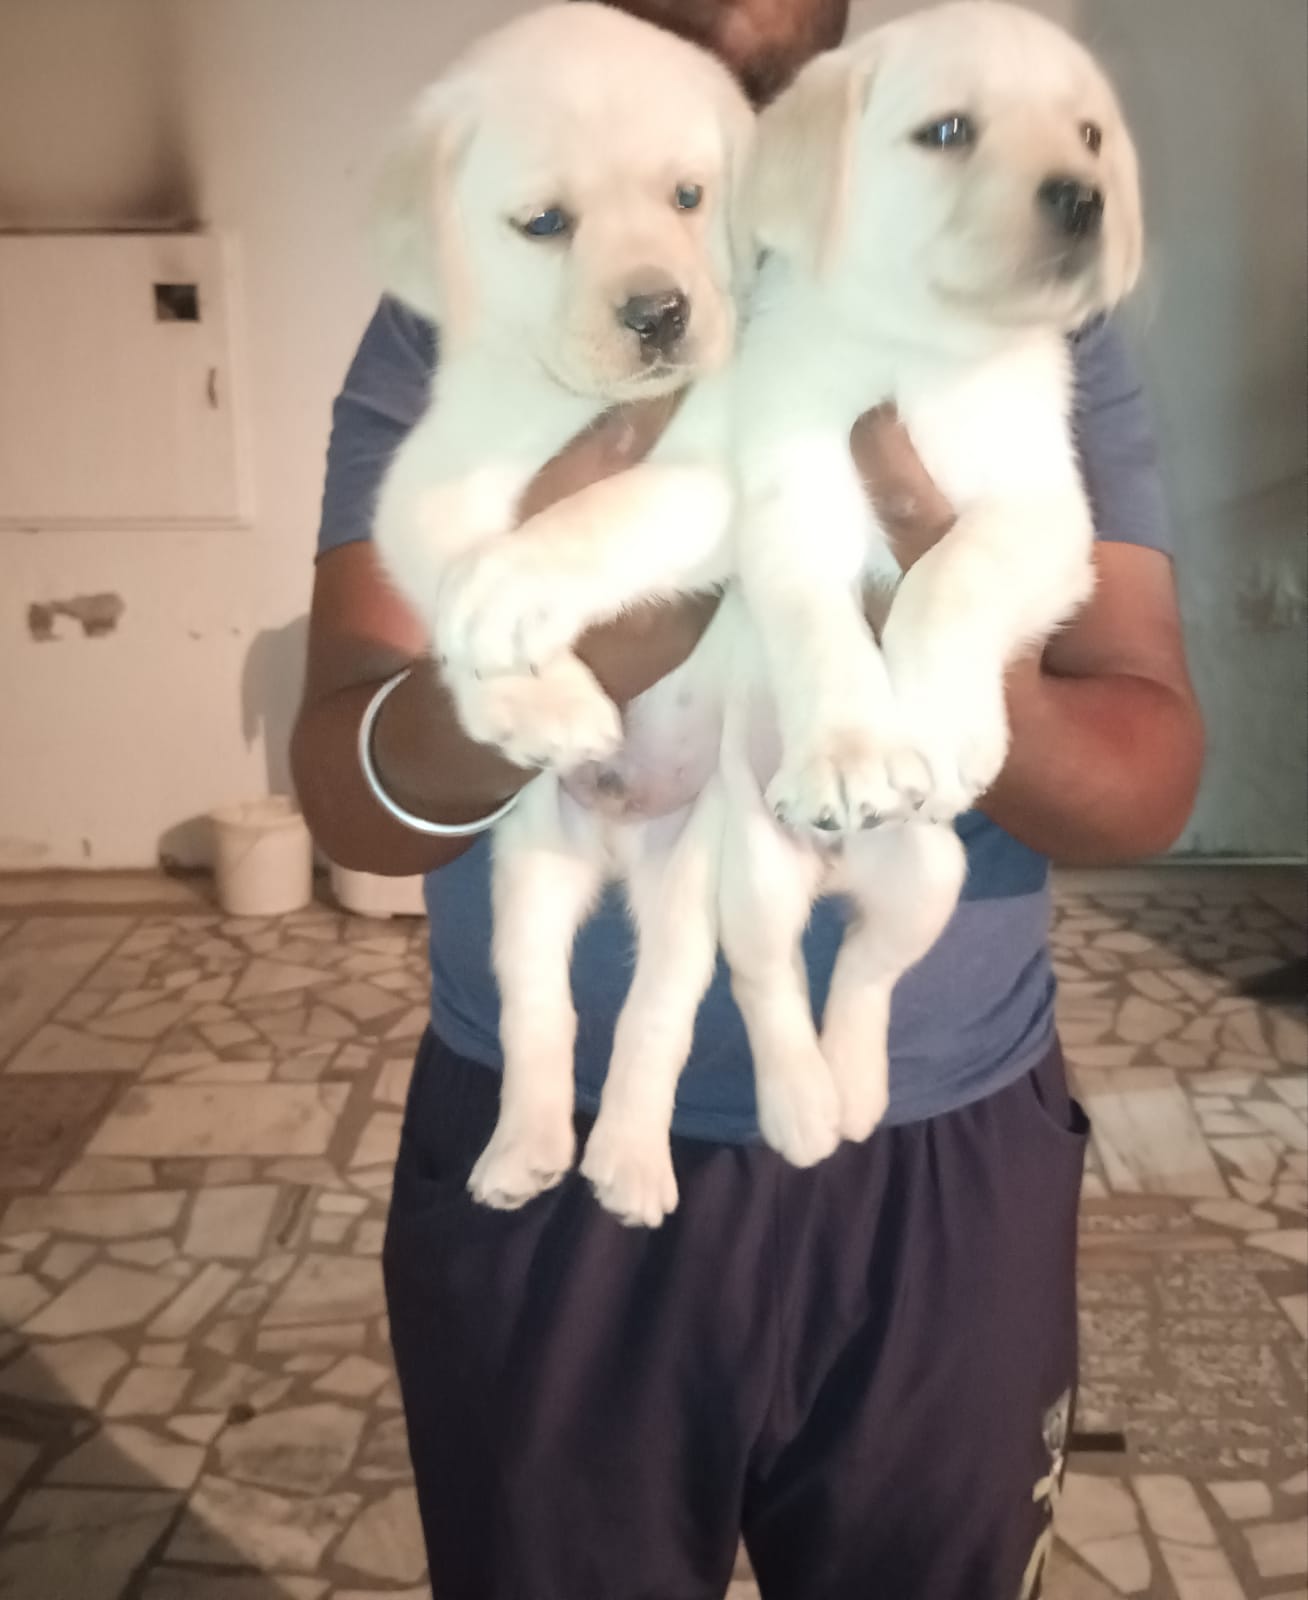 Labrador Retriever puppies from Dashmesh nagar. Patiala. Breeder: Tajbeer singh